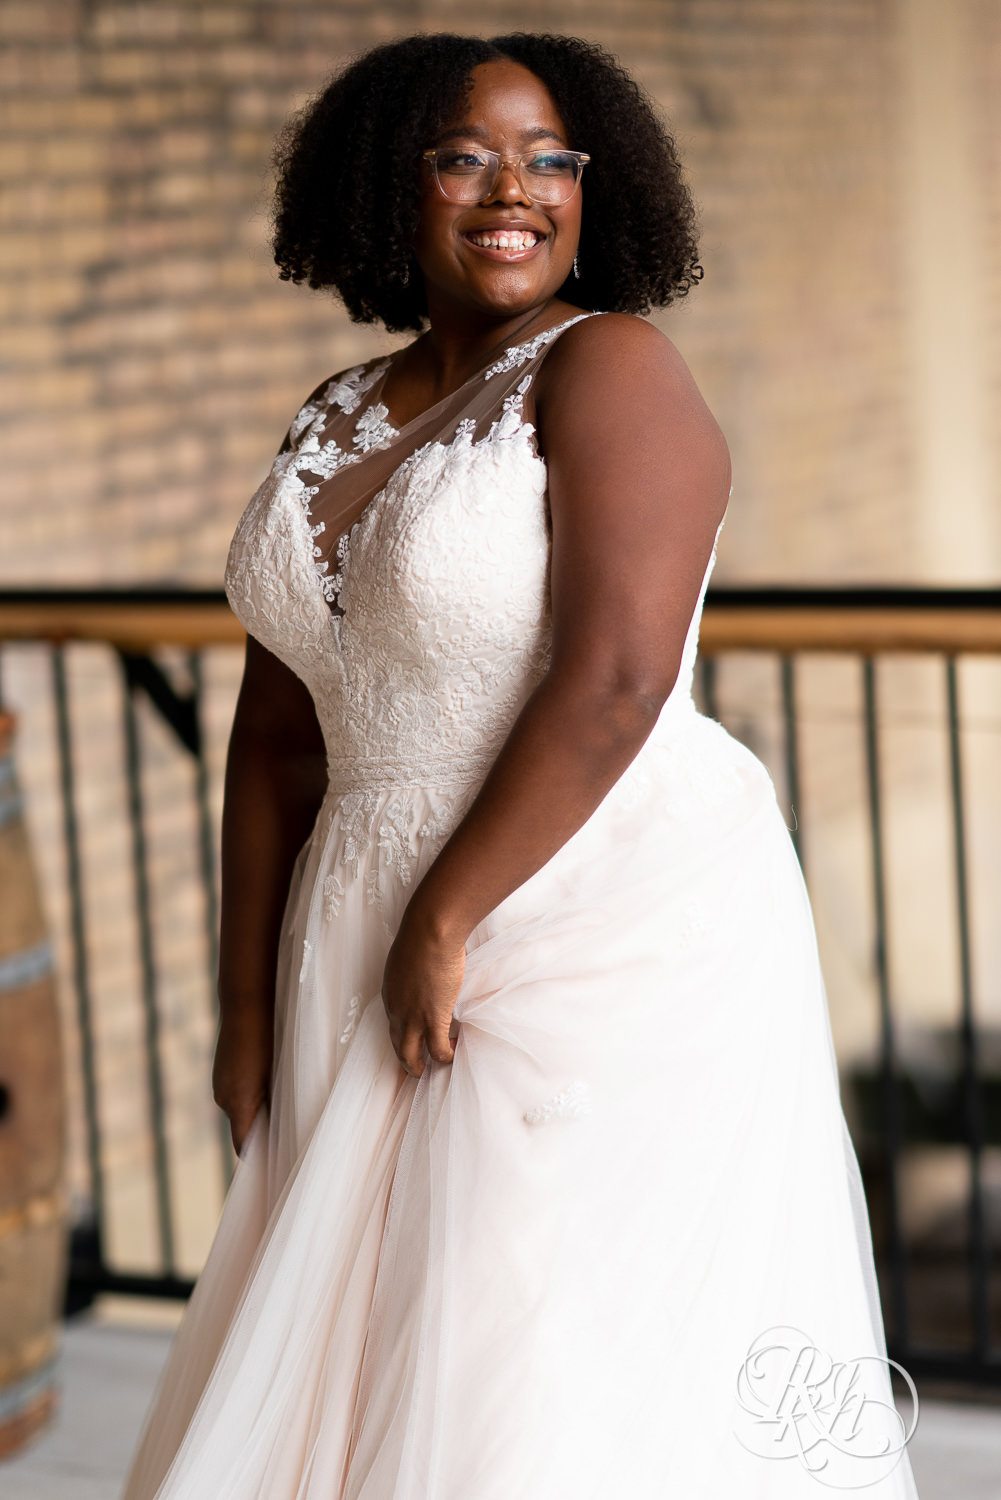 Black plus size bride in glasses smiling in wedding dresses in Minneapolis, Minnesota.